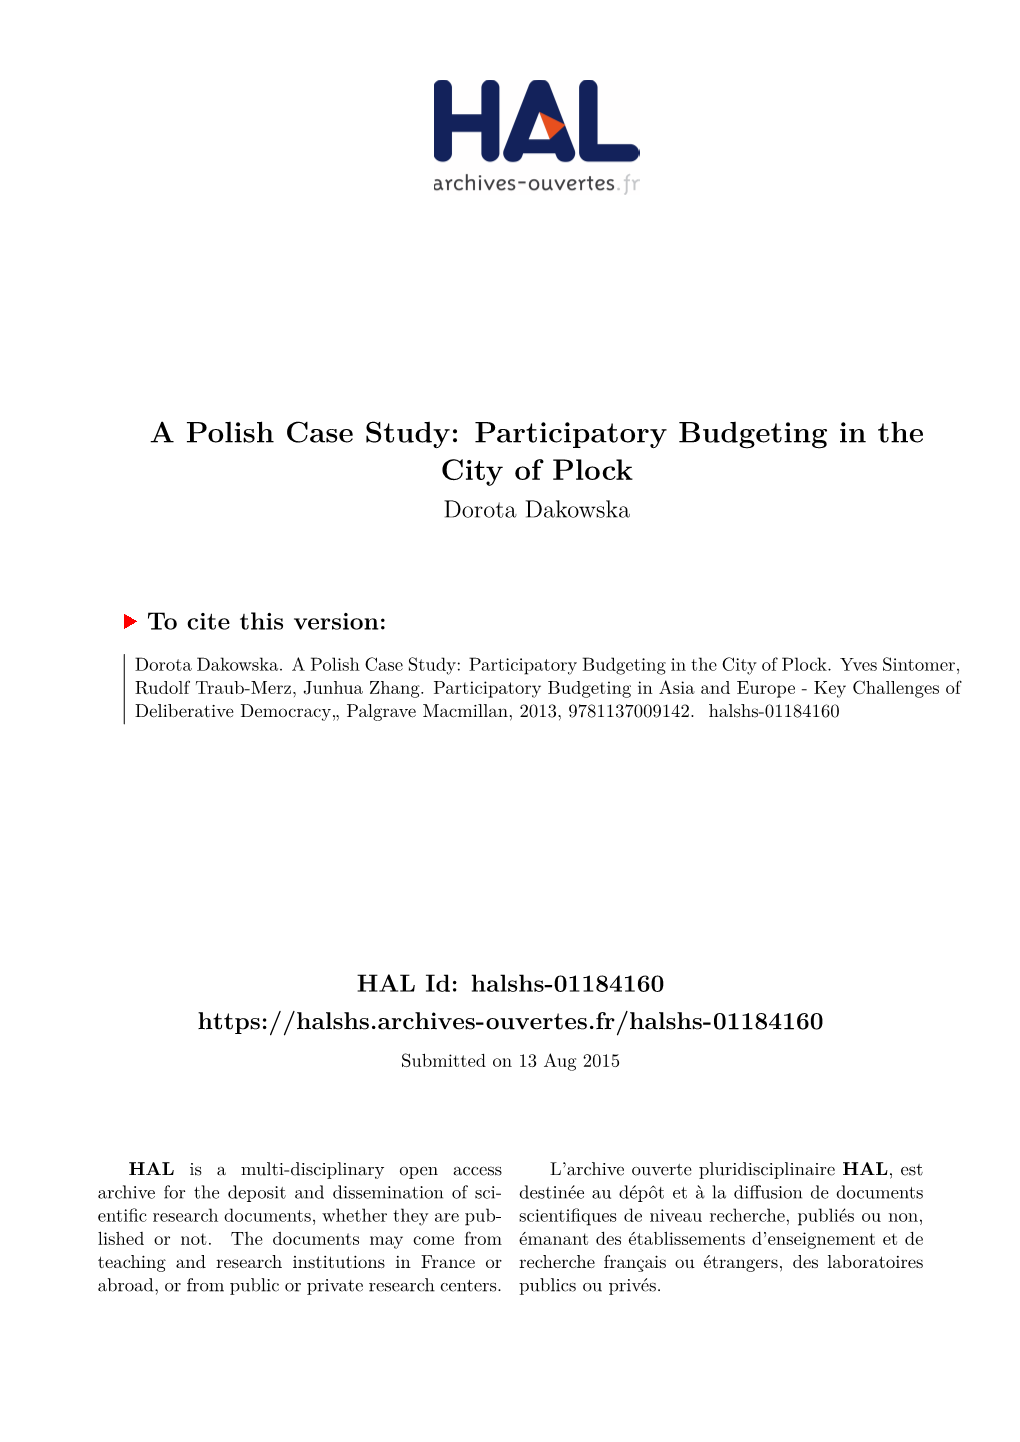 A Polish Case Study: Participatory Budgeting in the City of Plock Dorota Dakowska